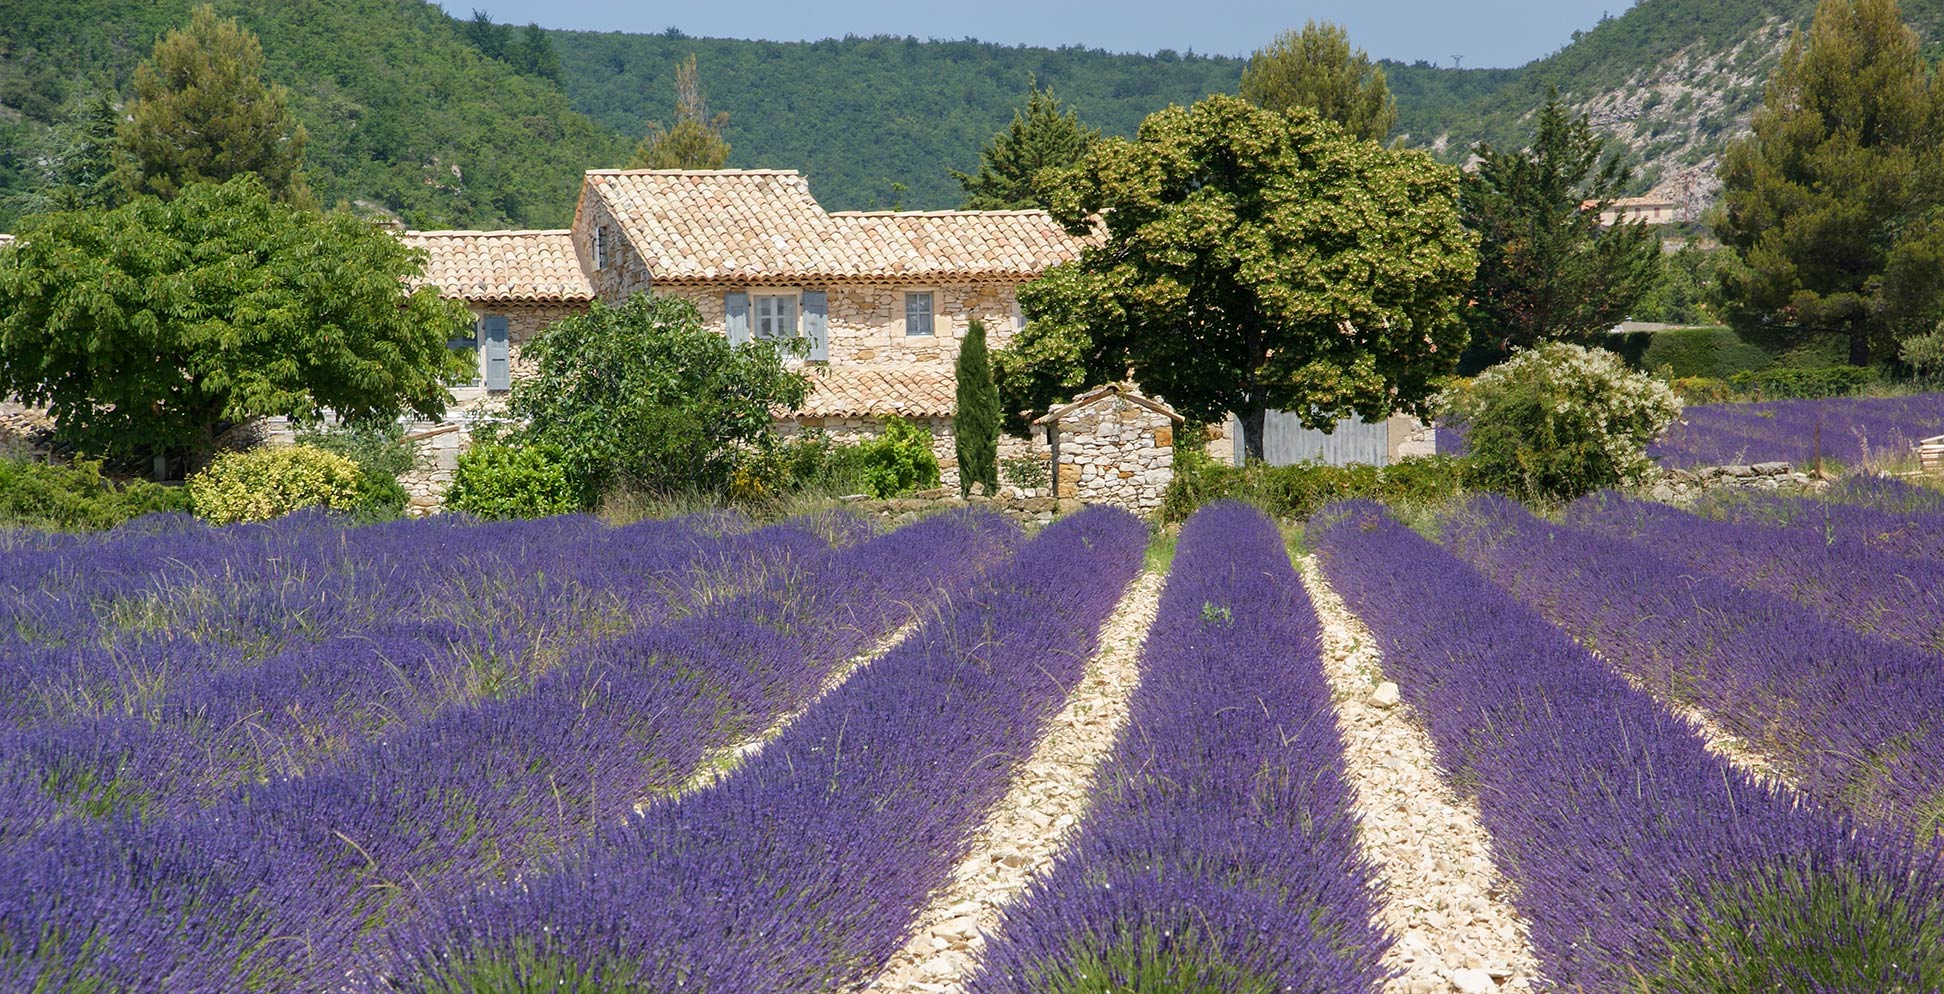 Lavender field in Côte d'Azur in Southern France